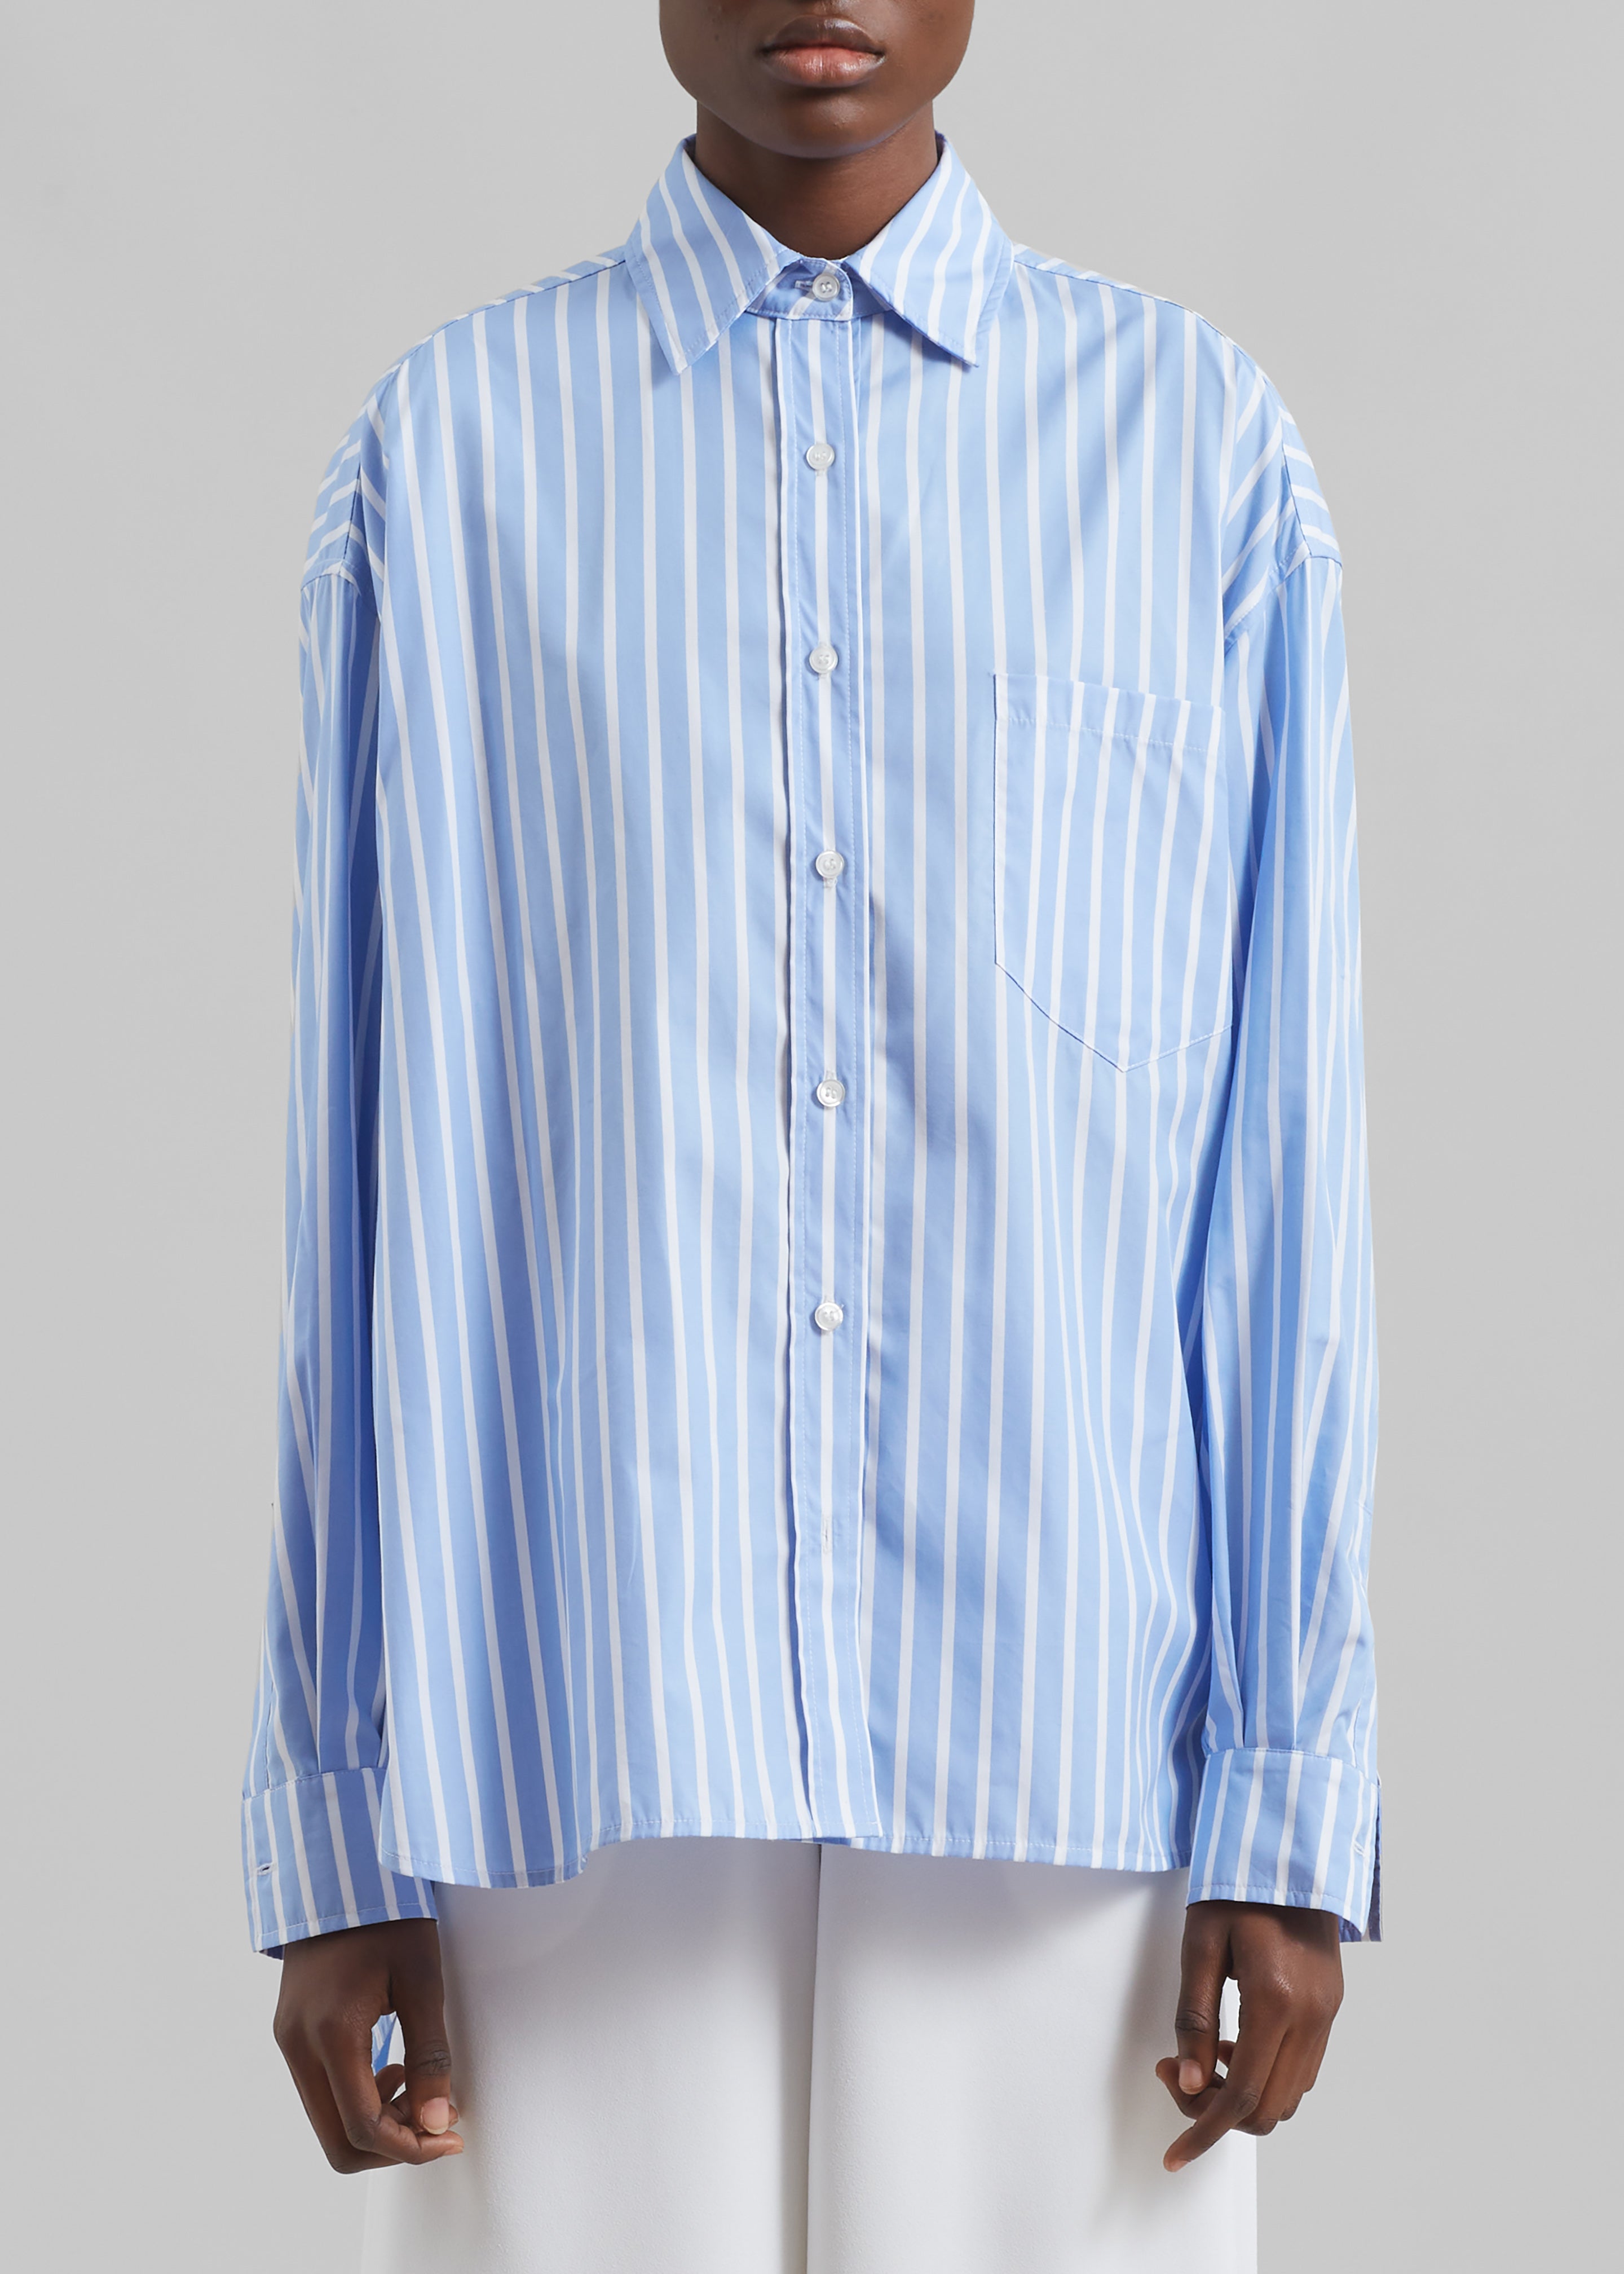 Georgia Boxy Shirt - Sky Blue/White Stripe - 8